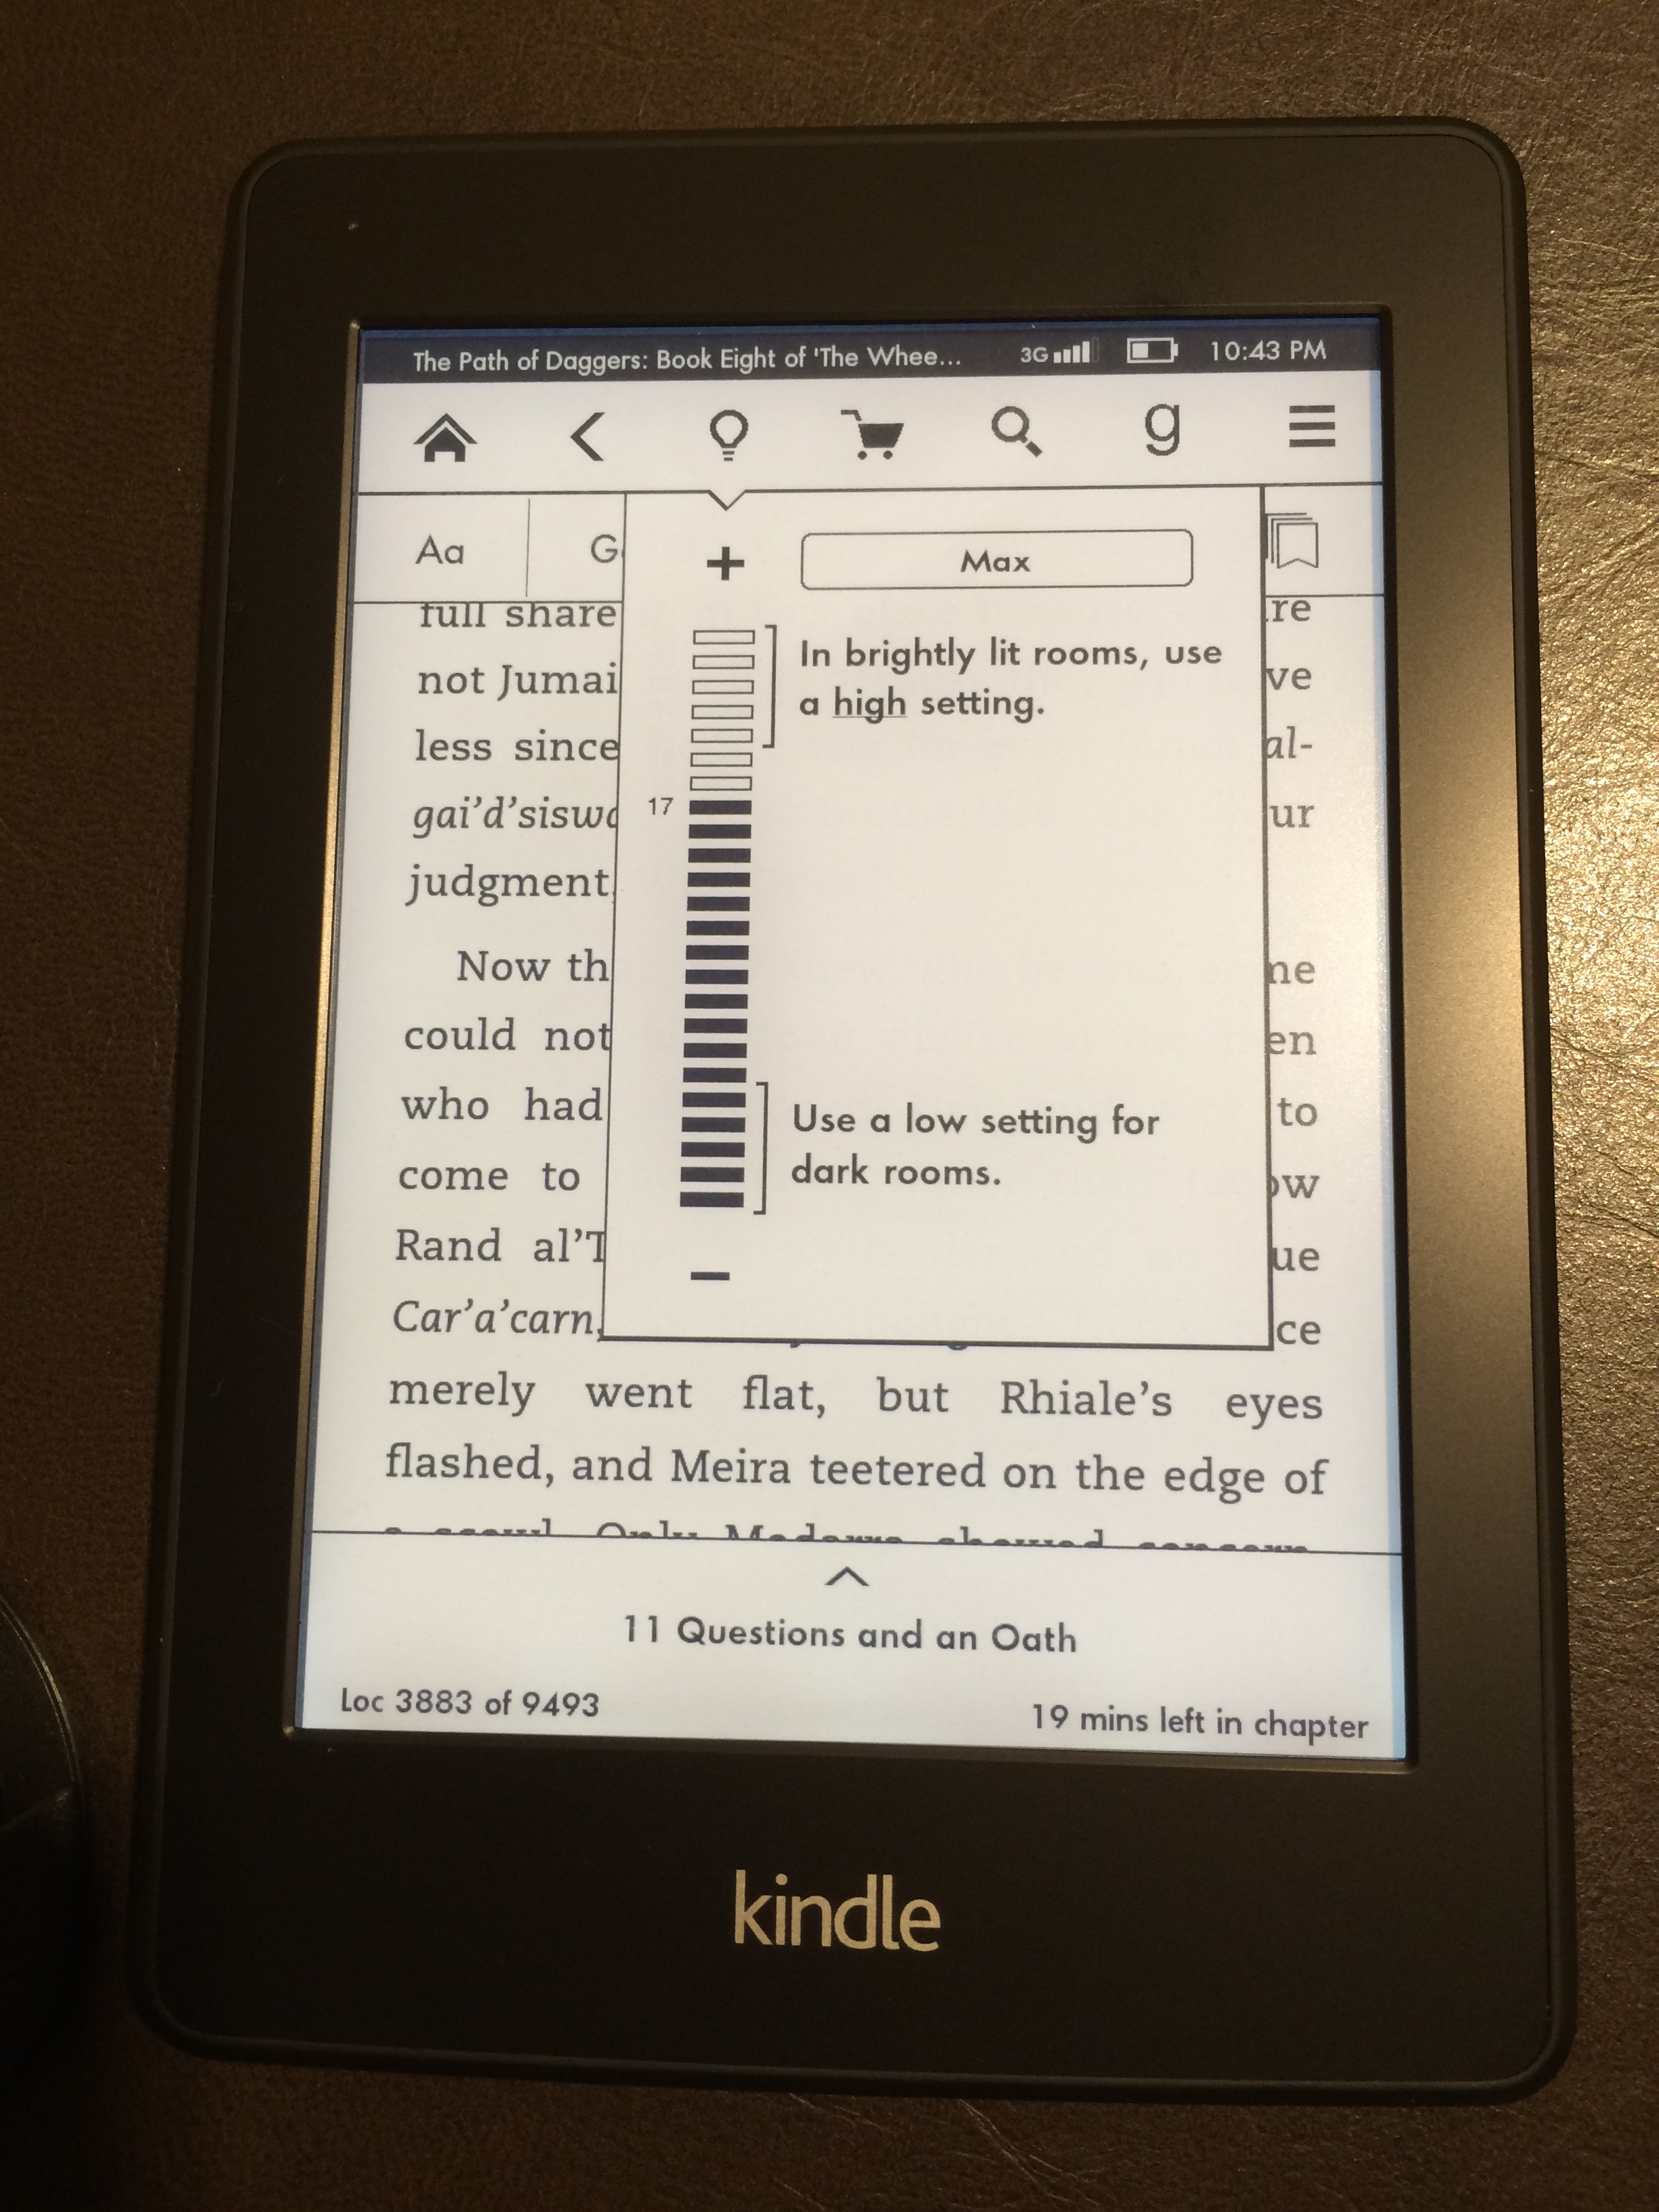 Kindle Paperwhite, brightness control